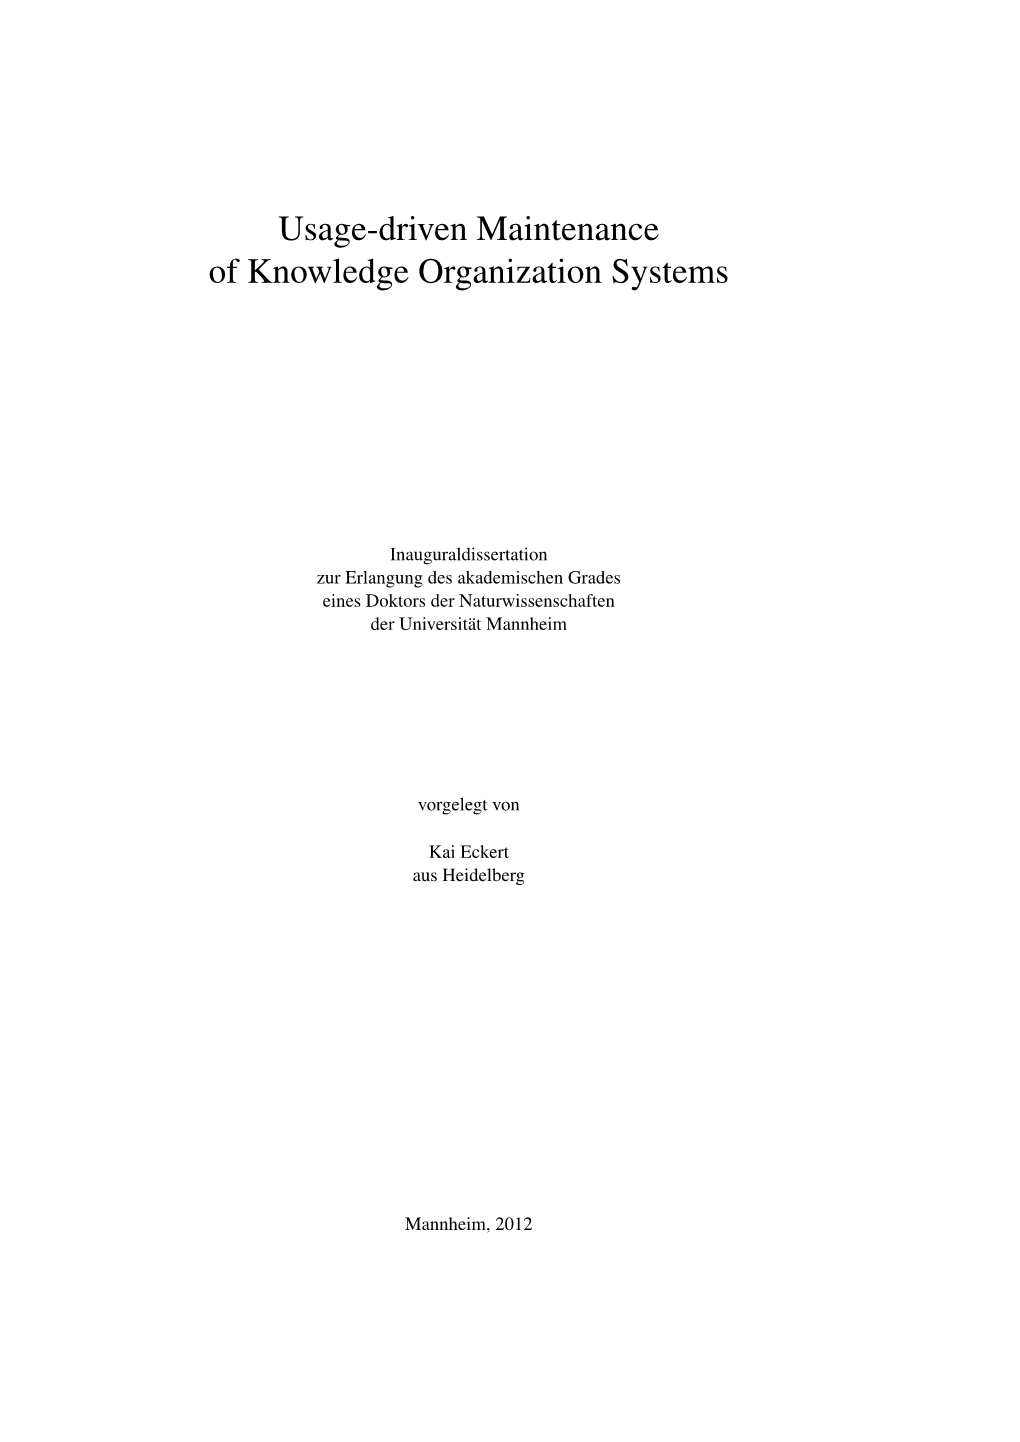 Usage-Driven Maintenance of Knowledge Organization Systems